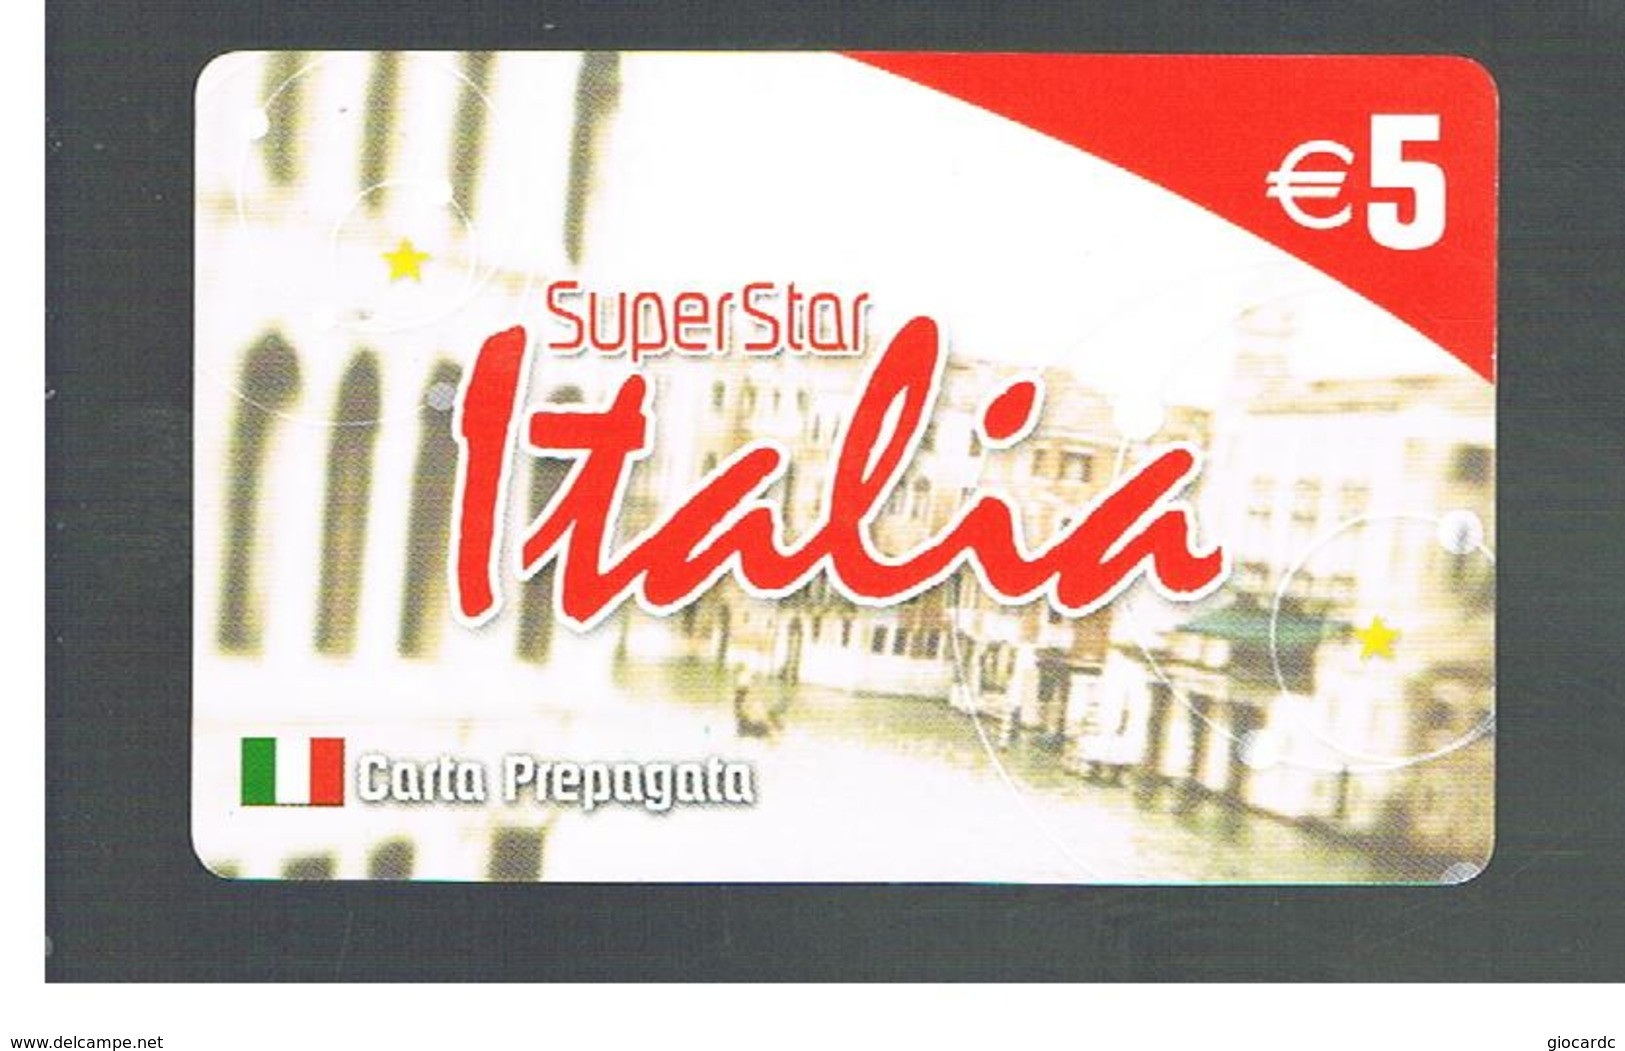 ITALIA (ITALY) - REMOTE -  T STAR - SUPERSTAR, BUILDING       - USED - RIF. 10971 - [2] Sim Cards, Prepaid & Refills